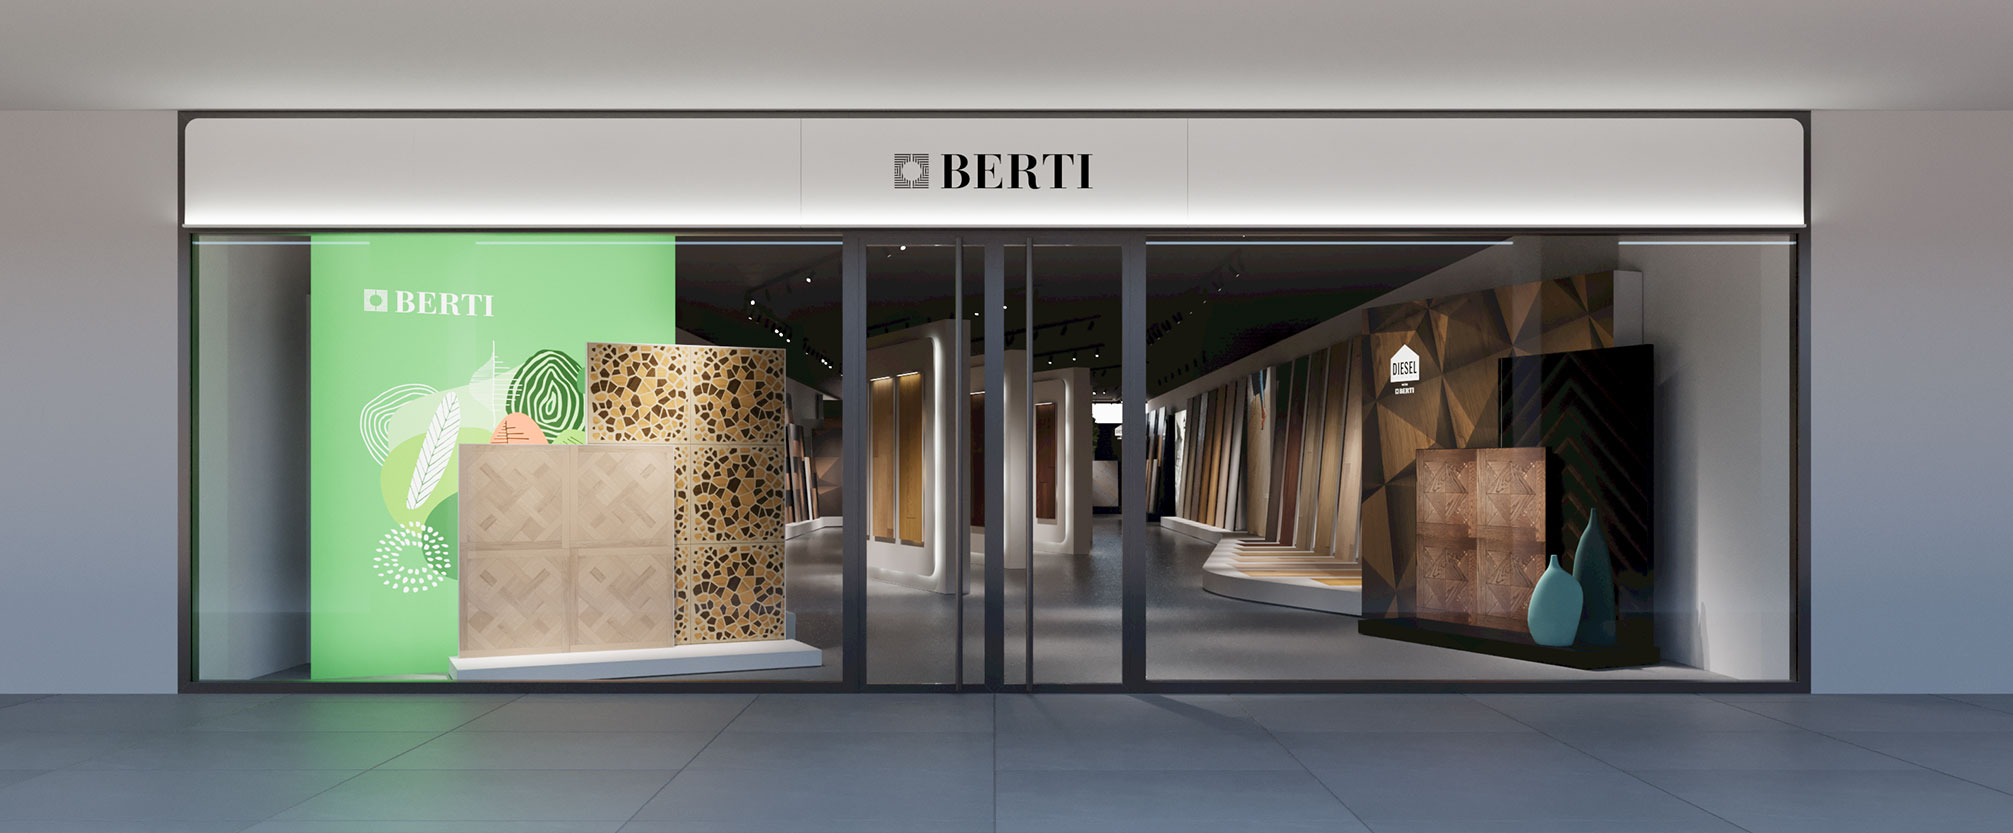 berti-shopping-experience-vetrine